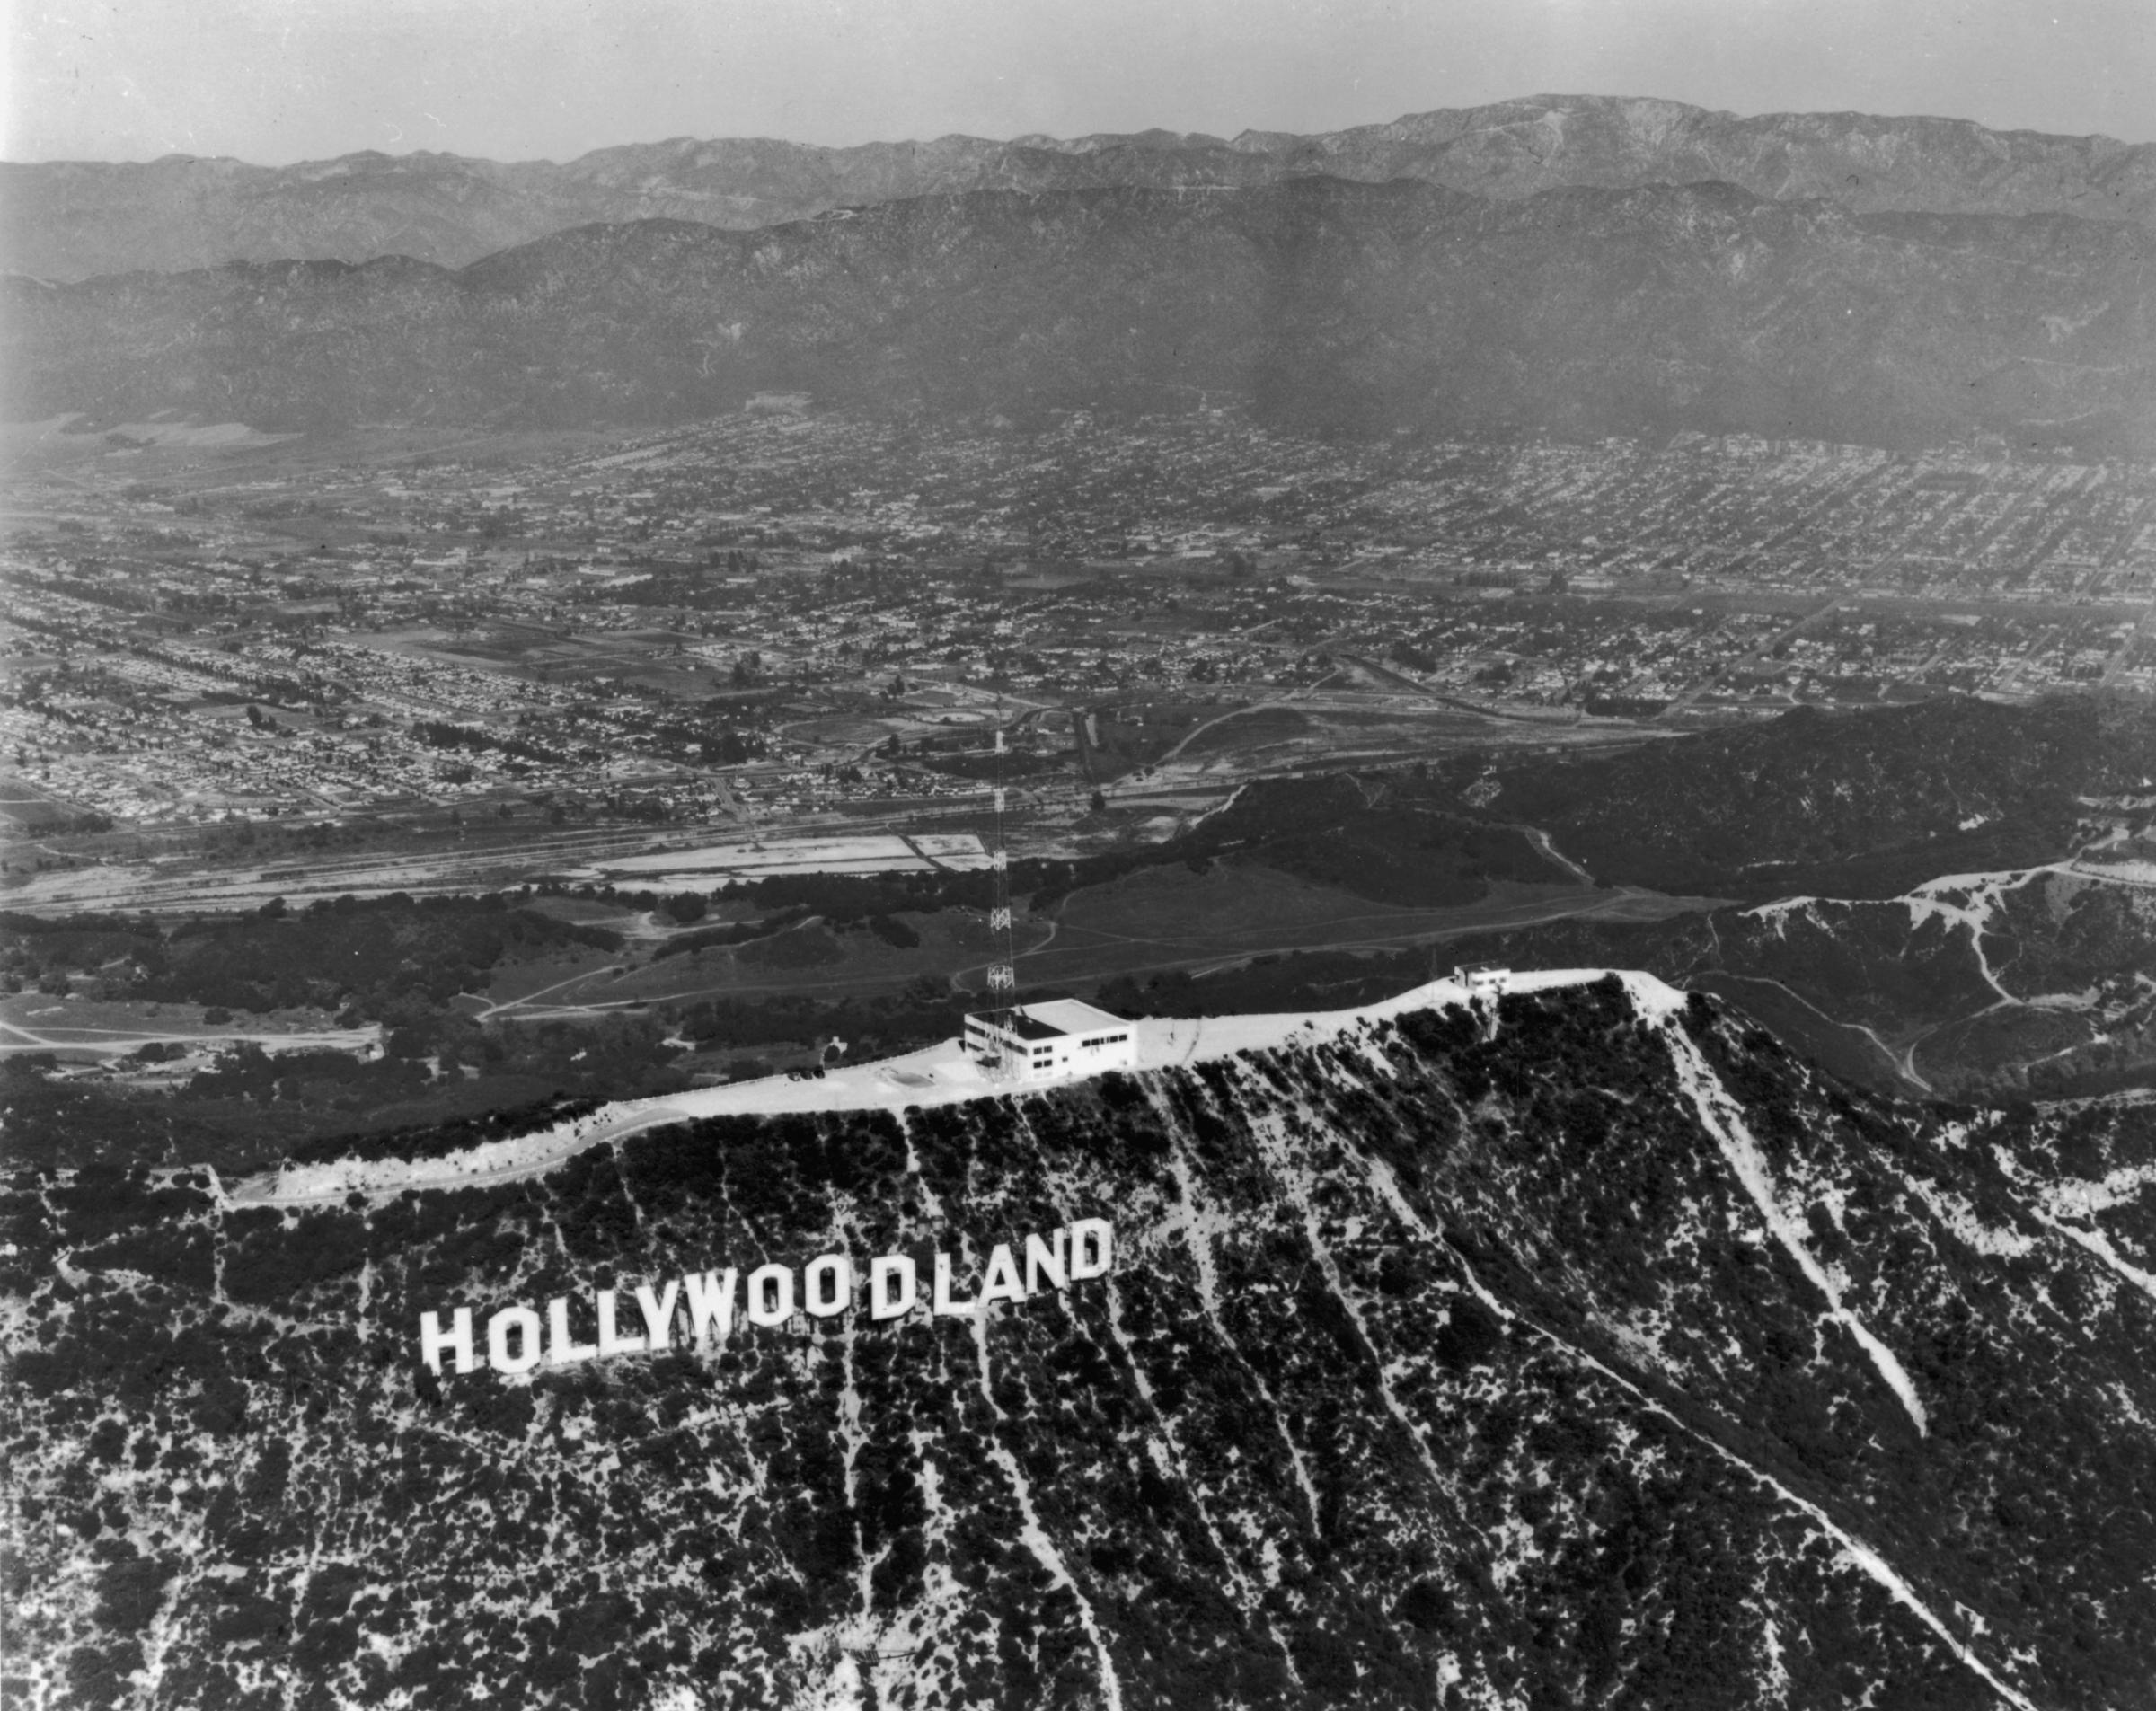 Hollywoodland sign, Hollywood, California, 1935.